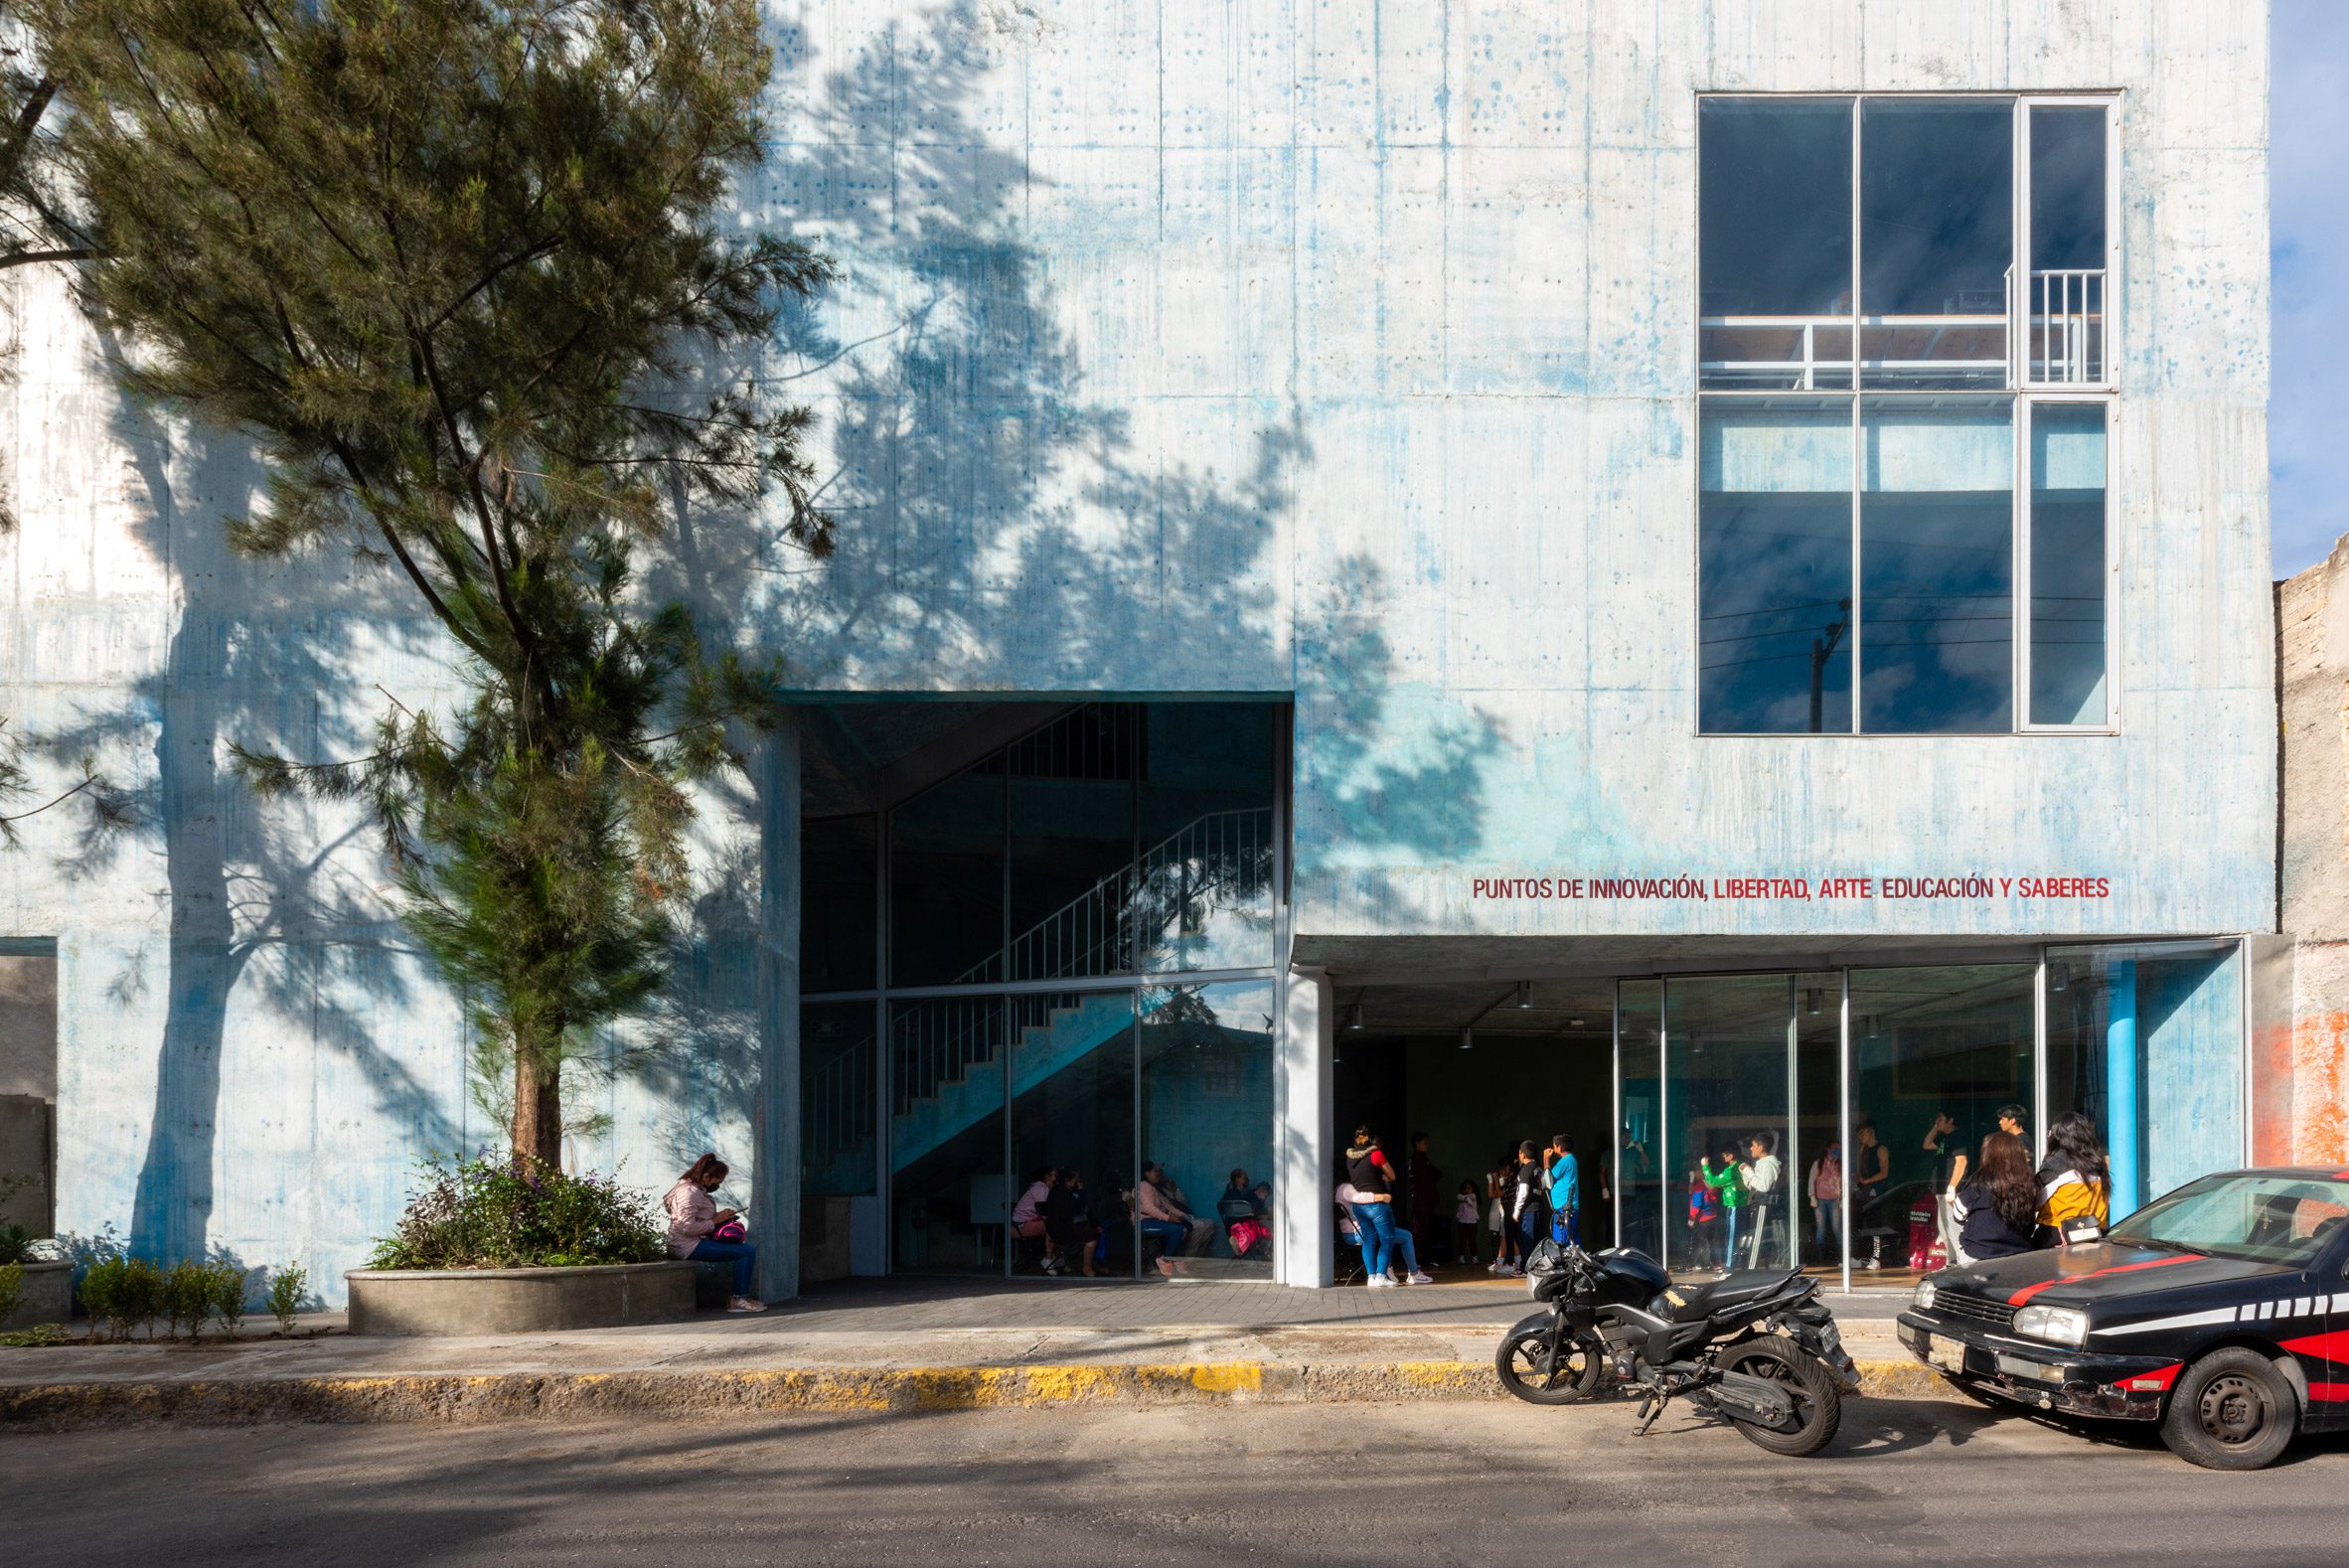 Community centre by WORKac and Ignacio Urquiza Architects